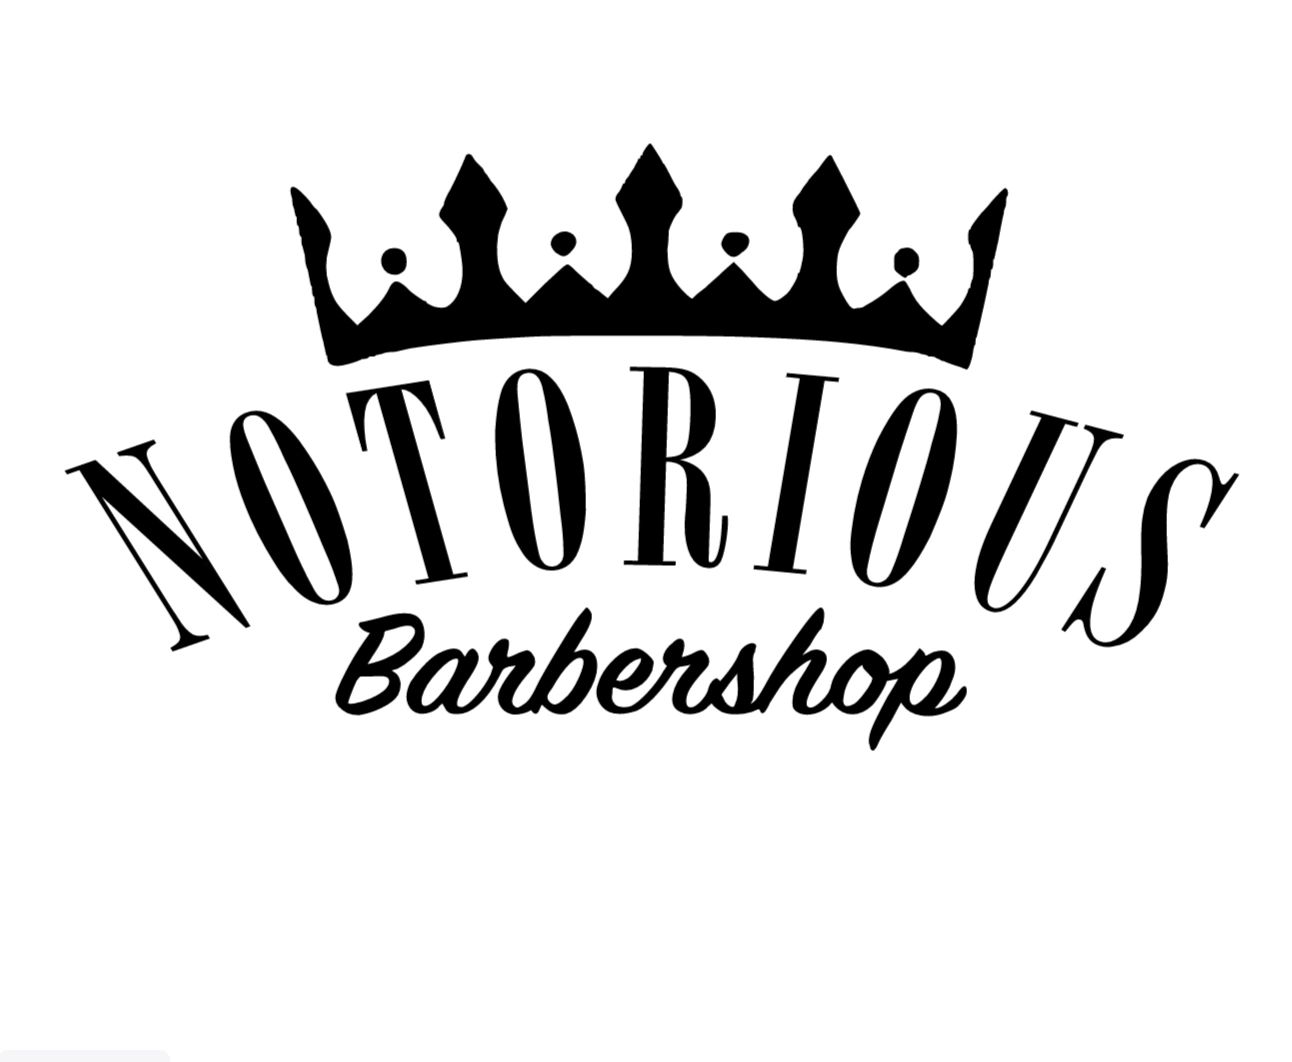 (c) Notorious-barbershop.com